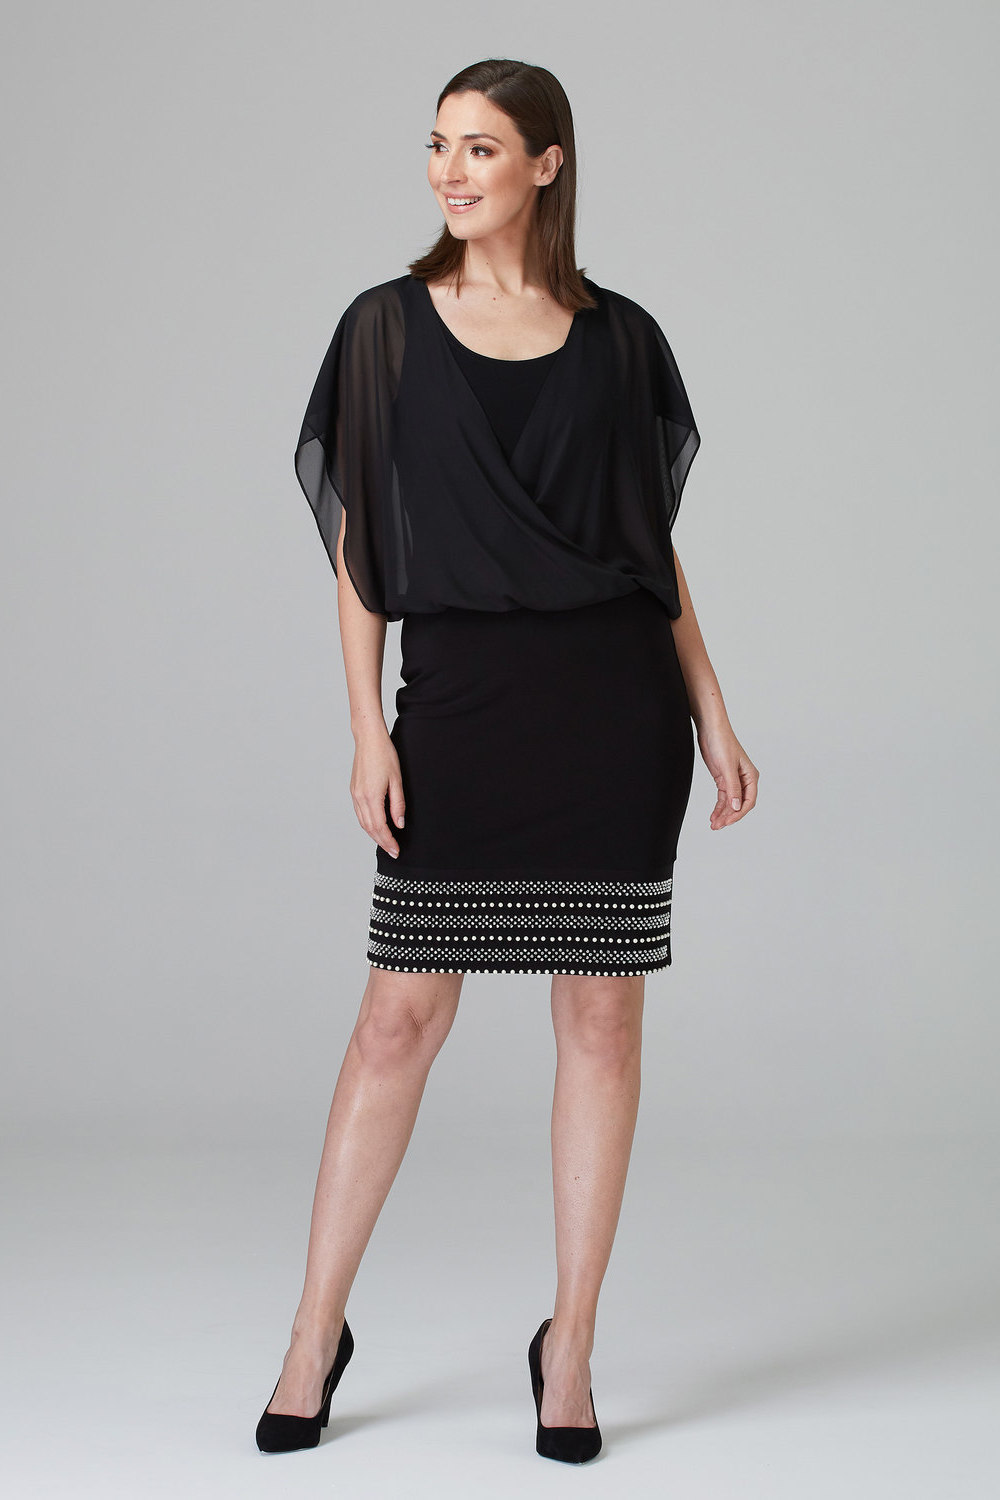 Joseph Ribkoff Dress Style 201166. Black